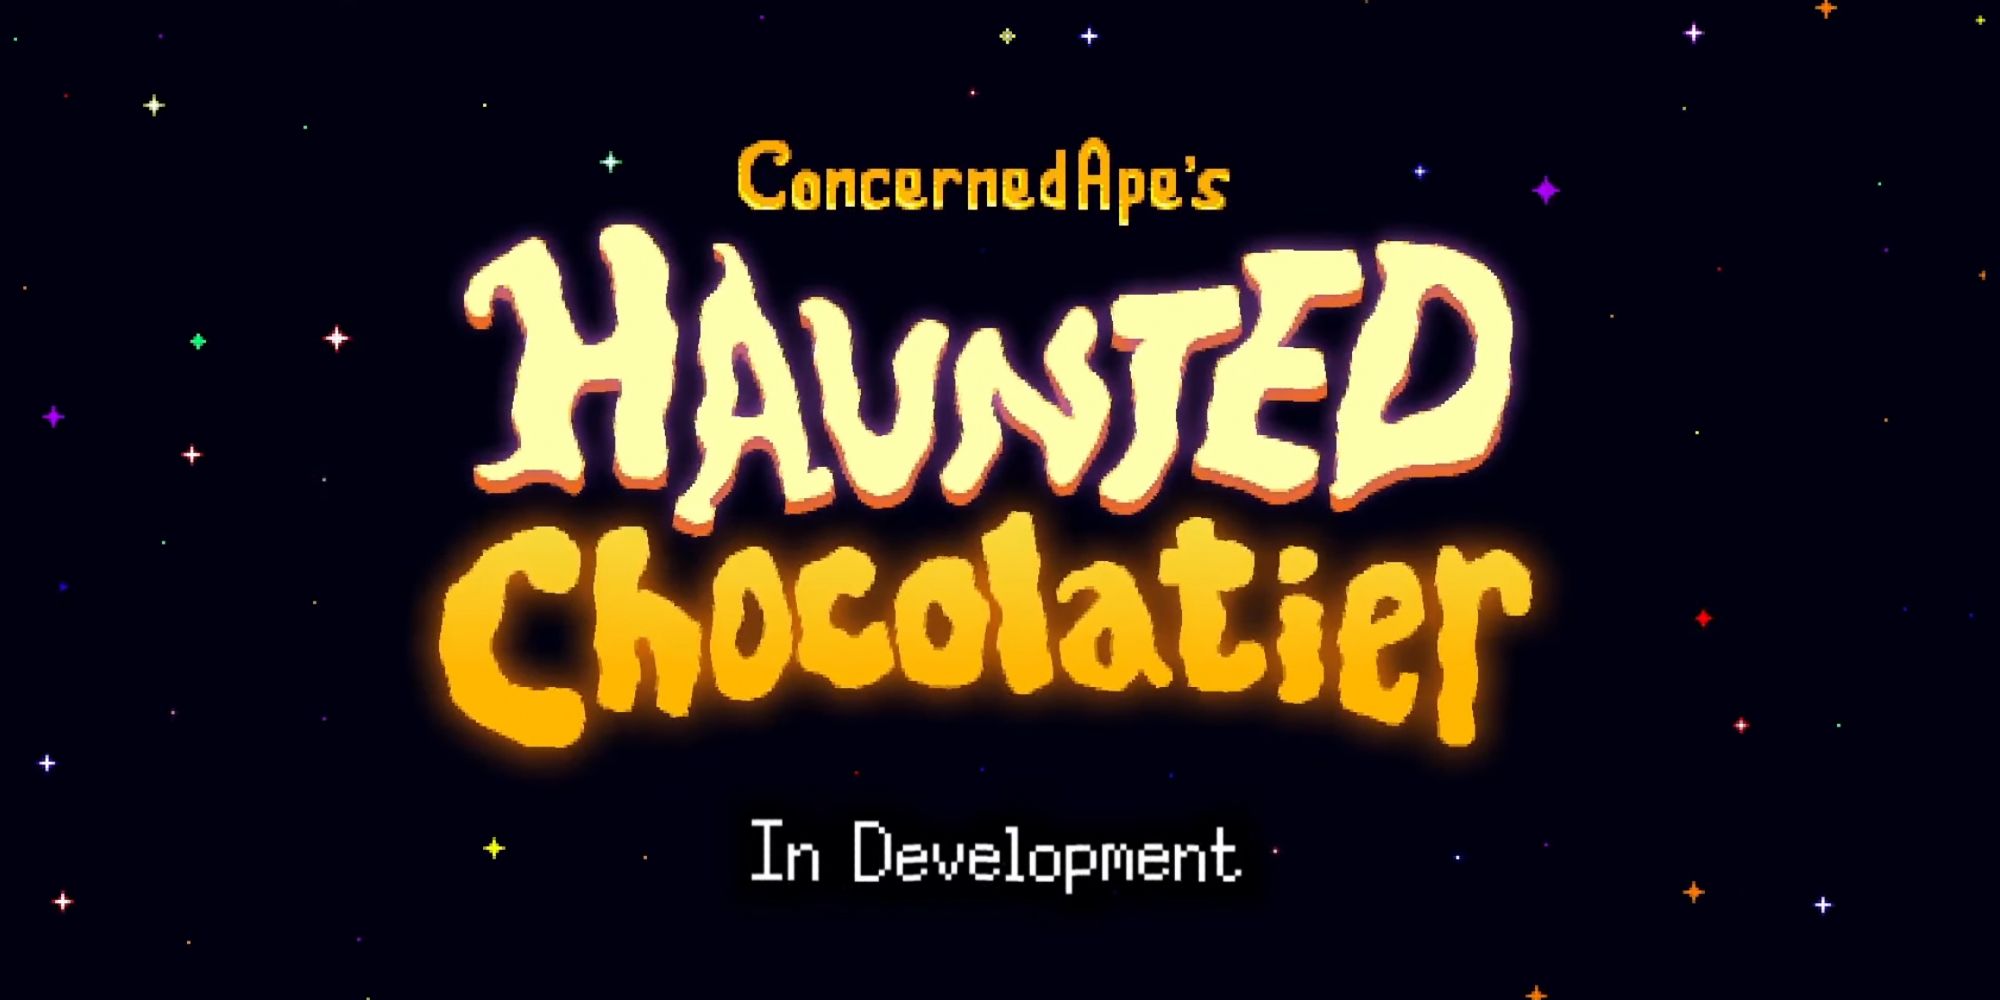 Stardew Valley-Style Relationships Confirmed For Haunted Chocolatier